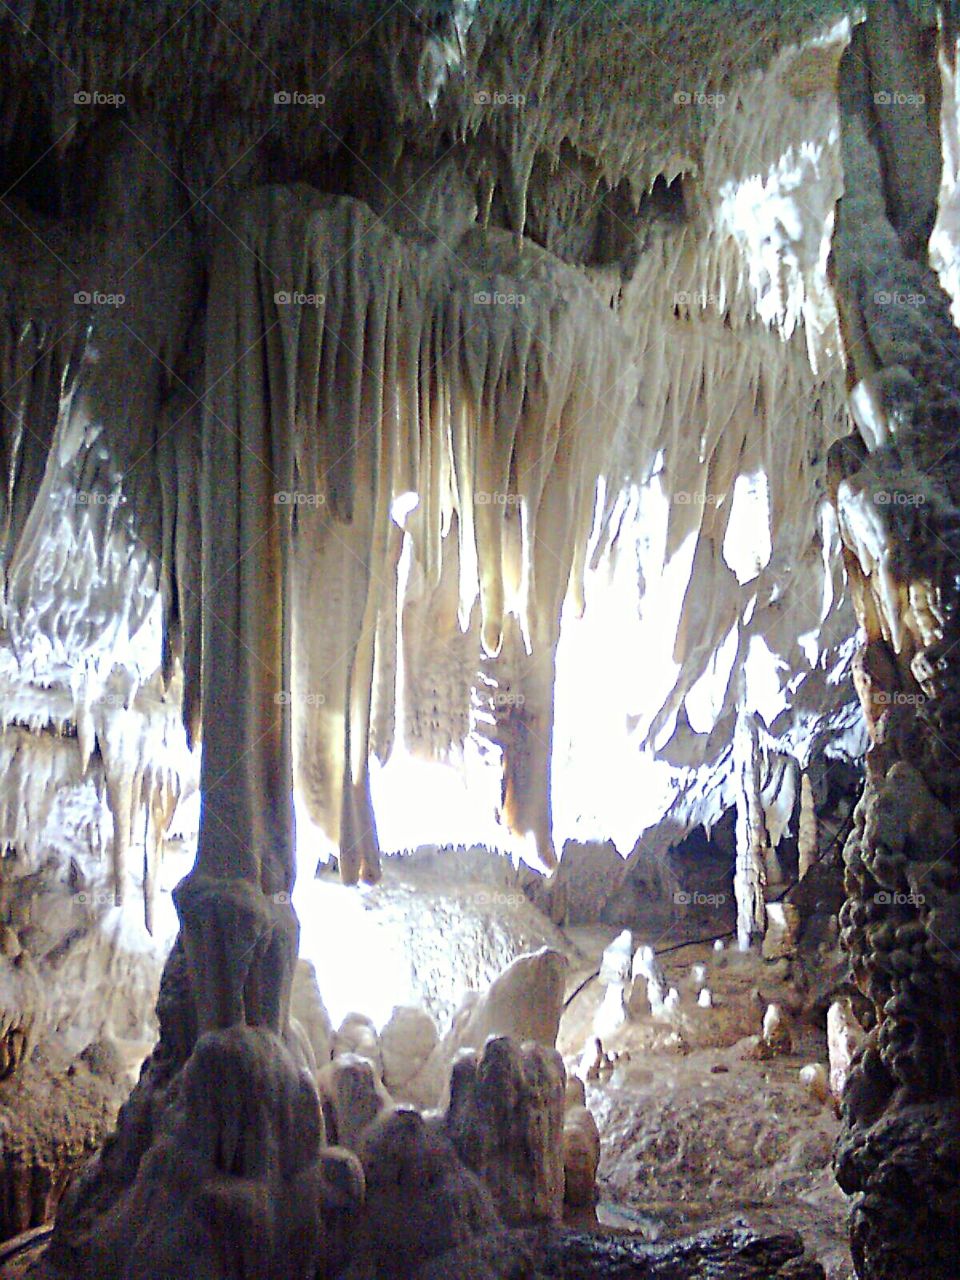 Cave Rajkova pećina, Majdanpek Serbia